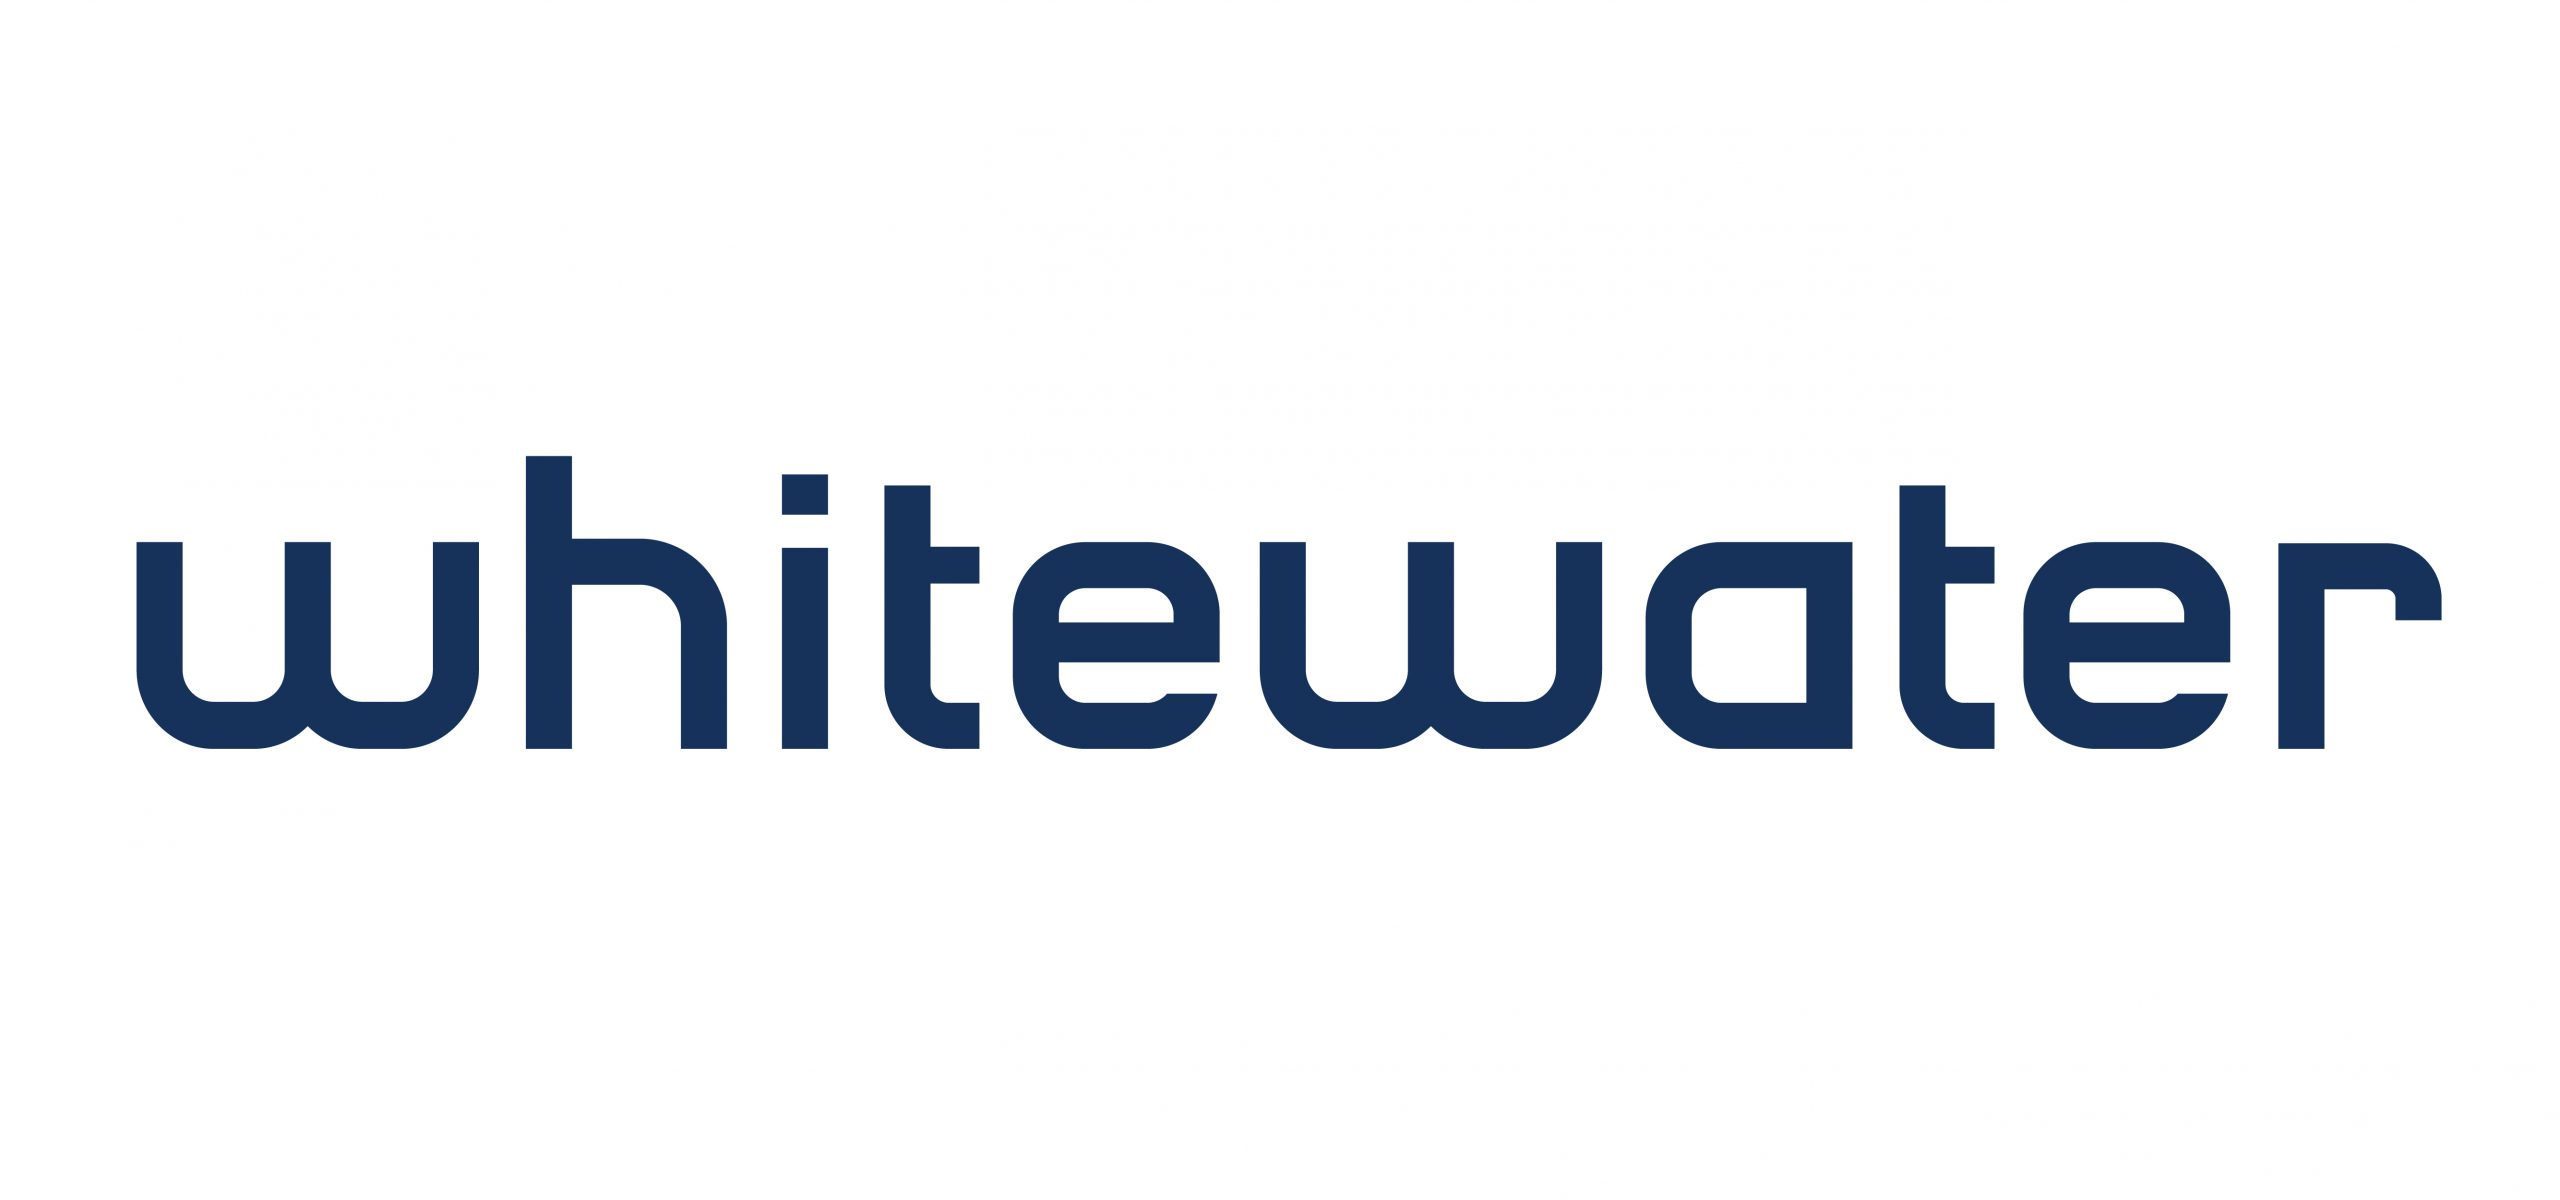 Whitewater Management